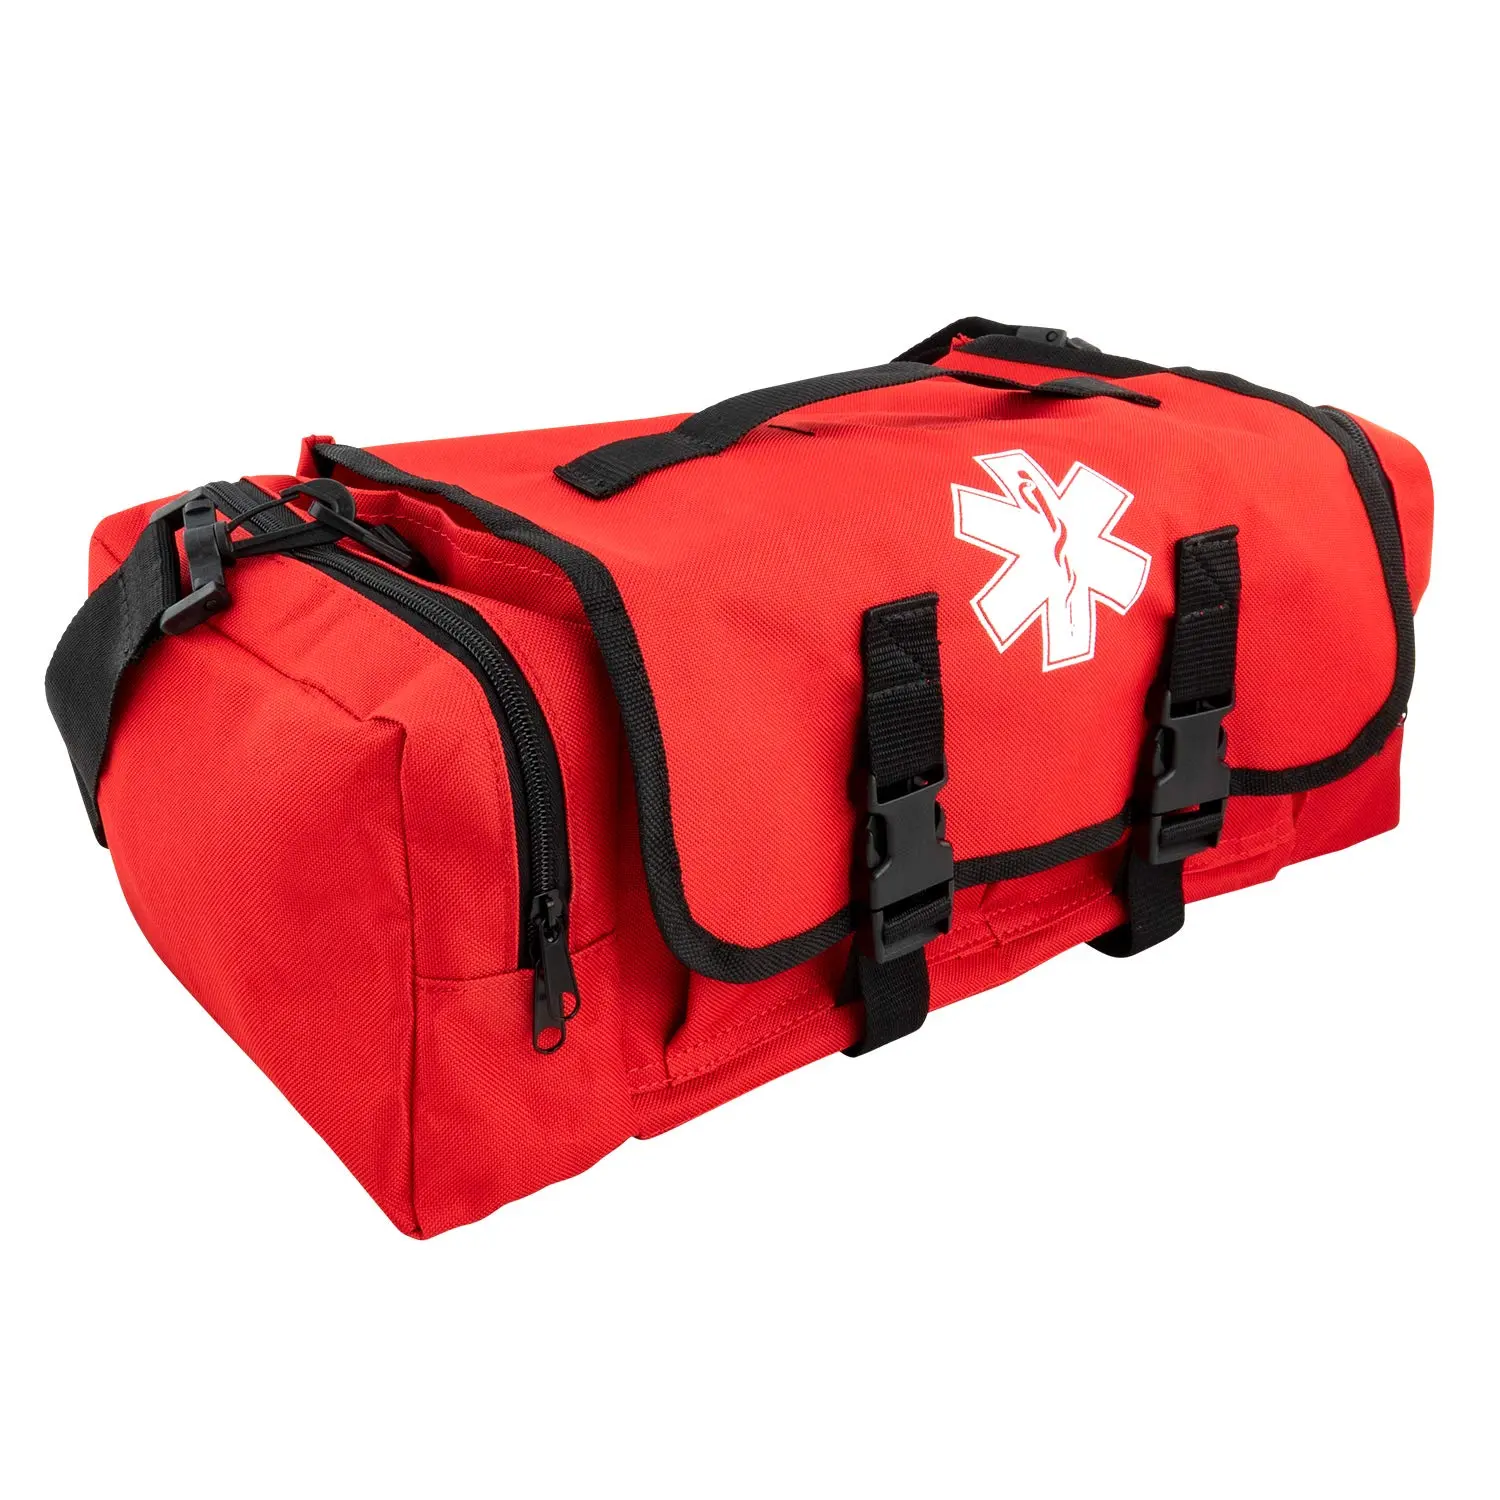 First Aid Medical Bag - EMS EMT Paramedic Economical Tactical First Responder Trauma Bag Empty - Portable Outdoor Travel Jump Re